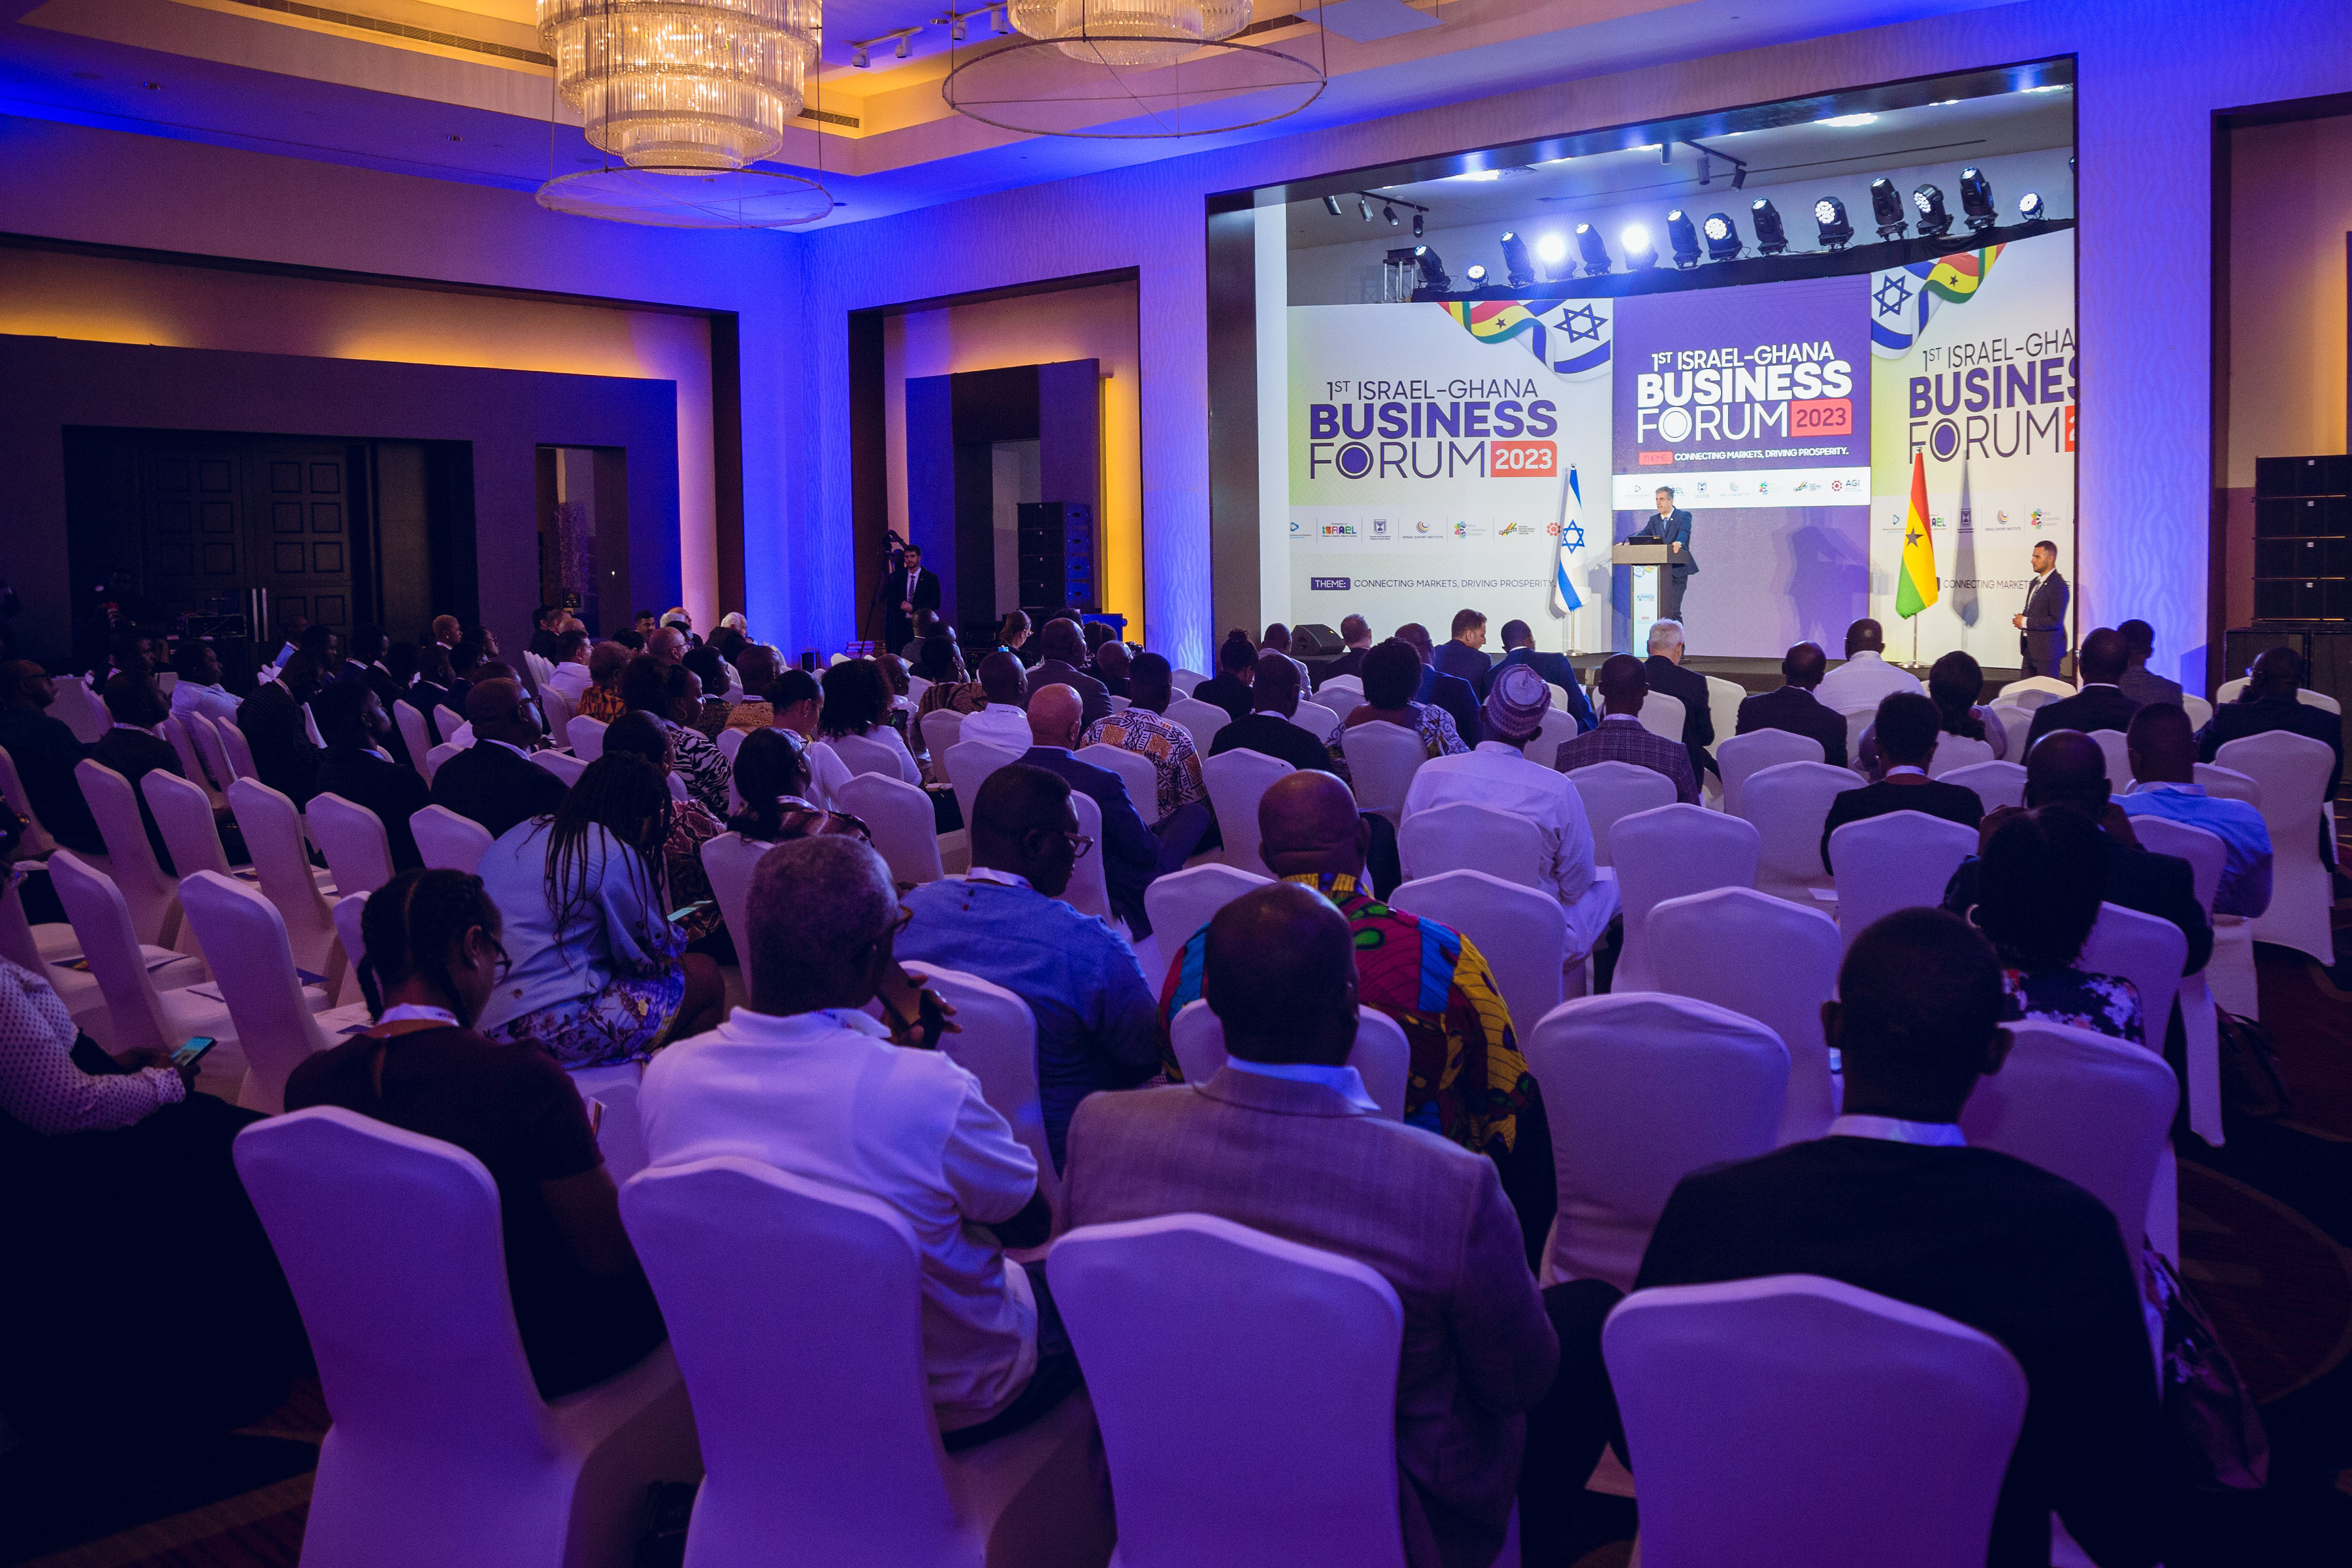 Israel-Ghana Business Forum event